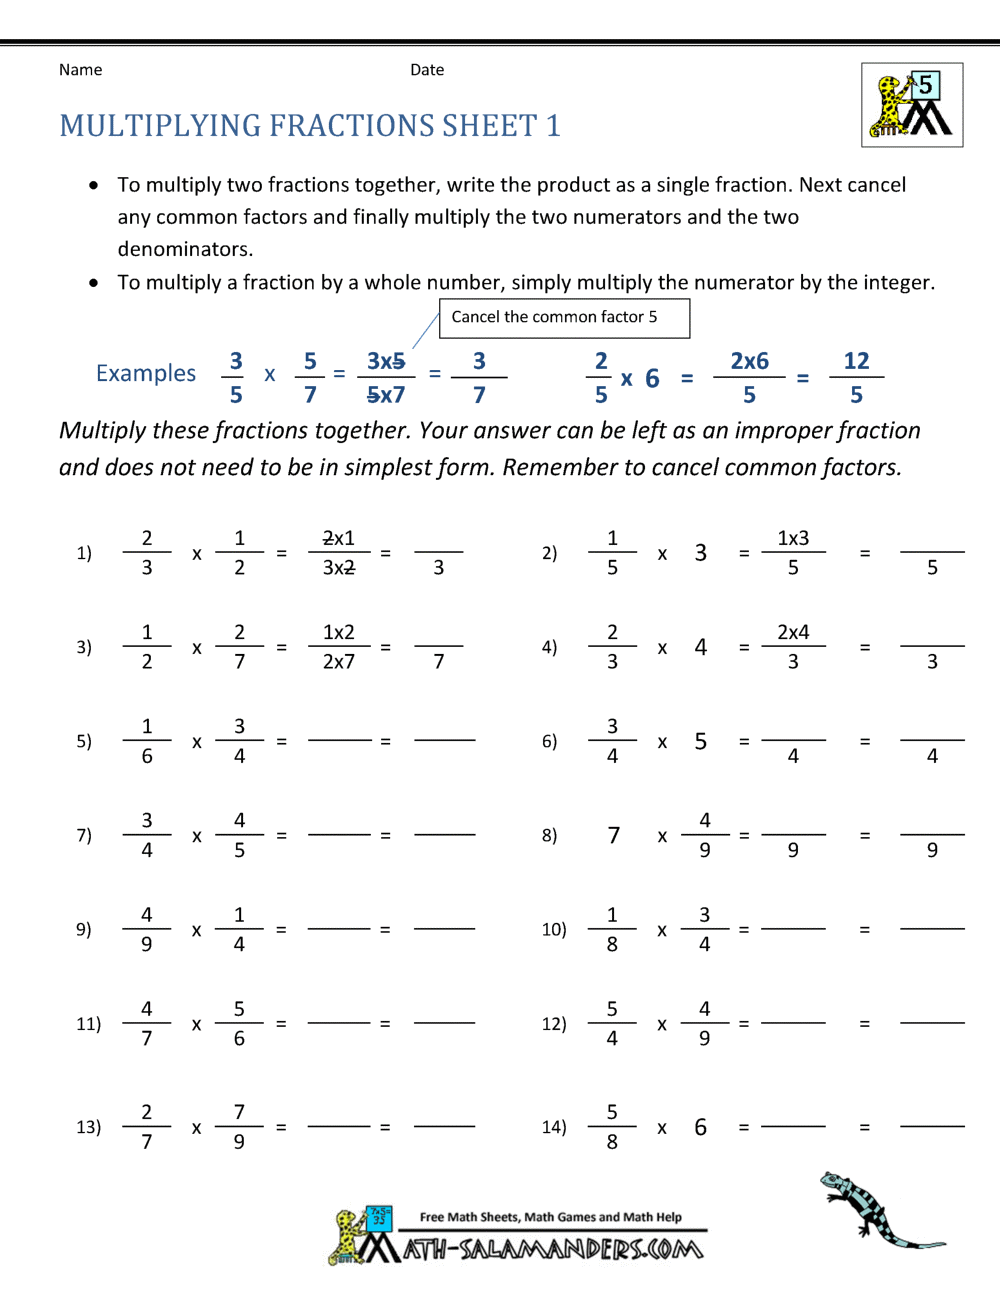 Multiplying Fractions Worksheet For Multiplying Rational Numbers Worksheet